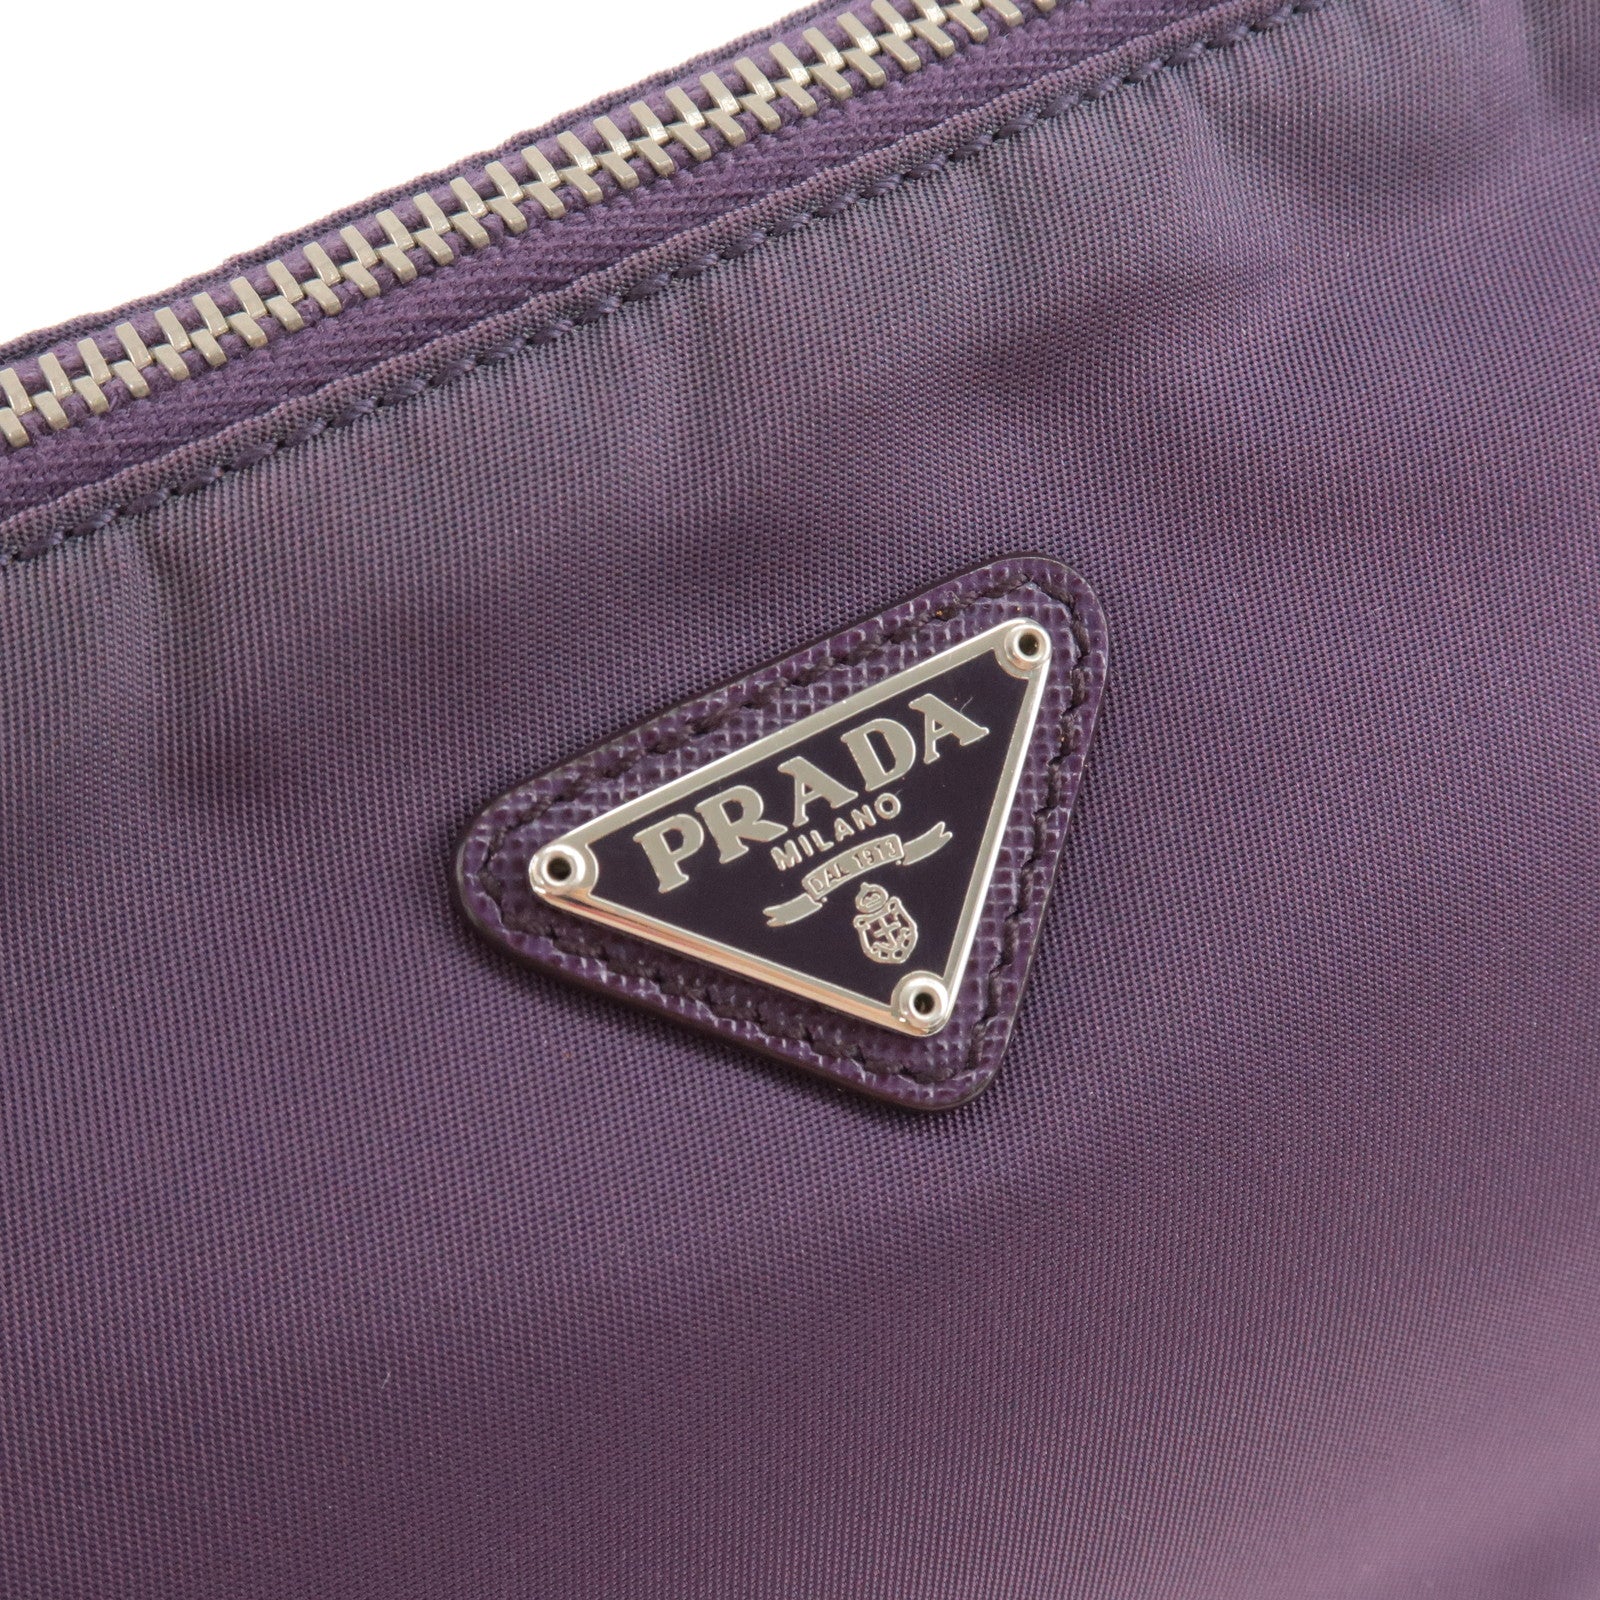 ep_vintage luxury Store - Bag - Purple - Logo - Pouch - Prada Neopren  Waistbag aus SS99 - Purse - Cosmetic - Nylon - PRADA - MV633 – dct - Hand